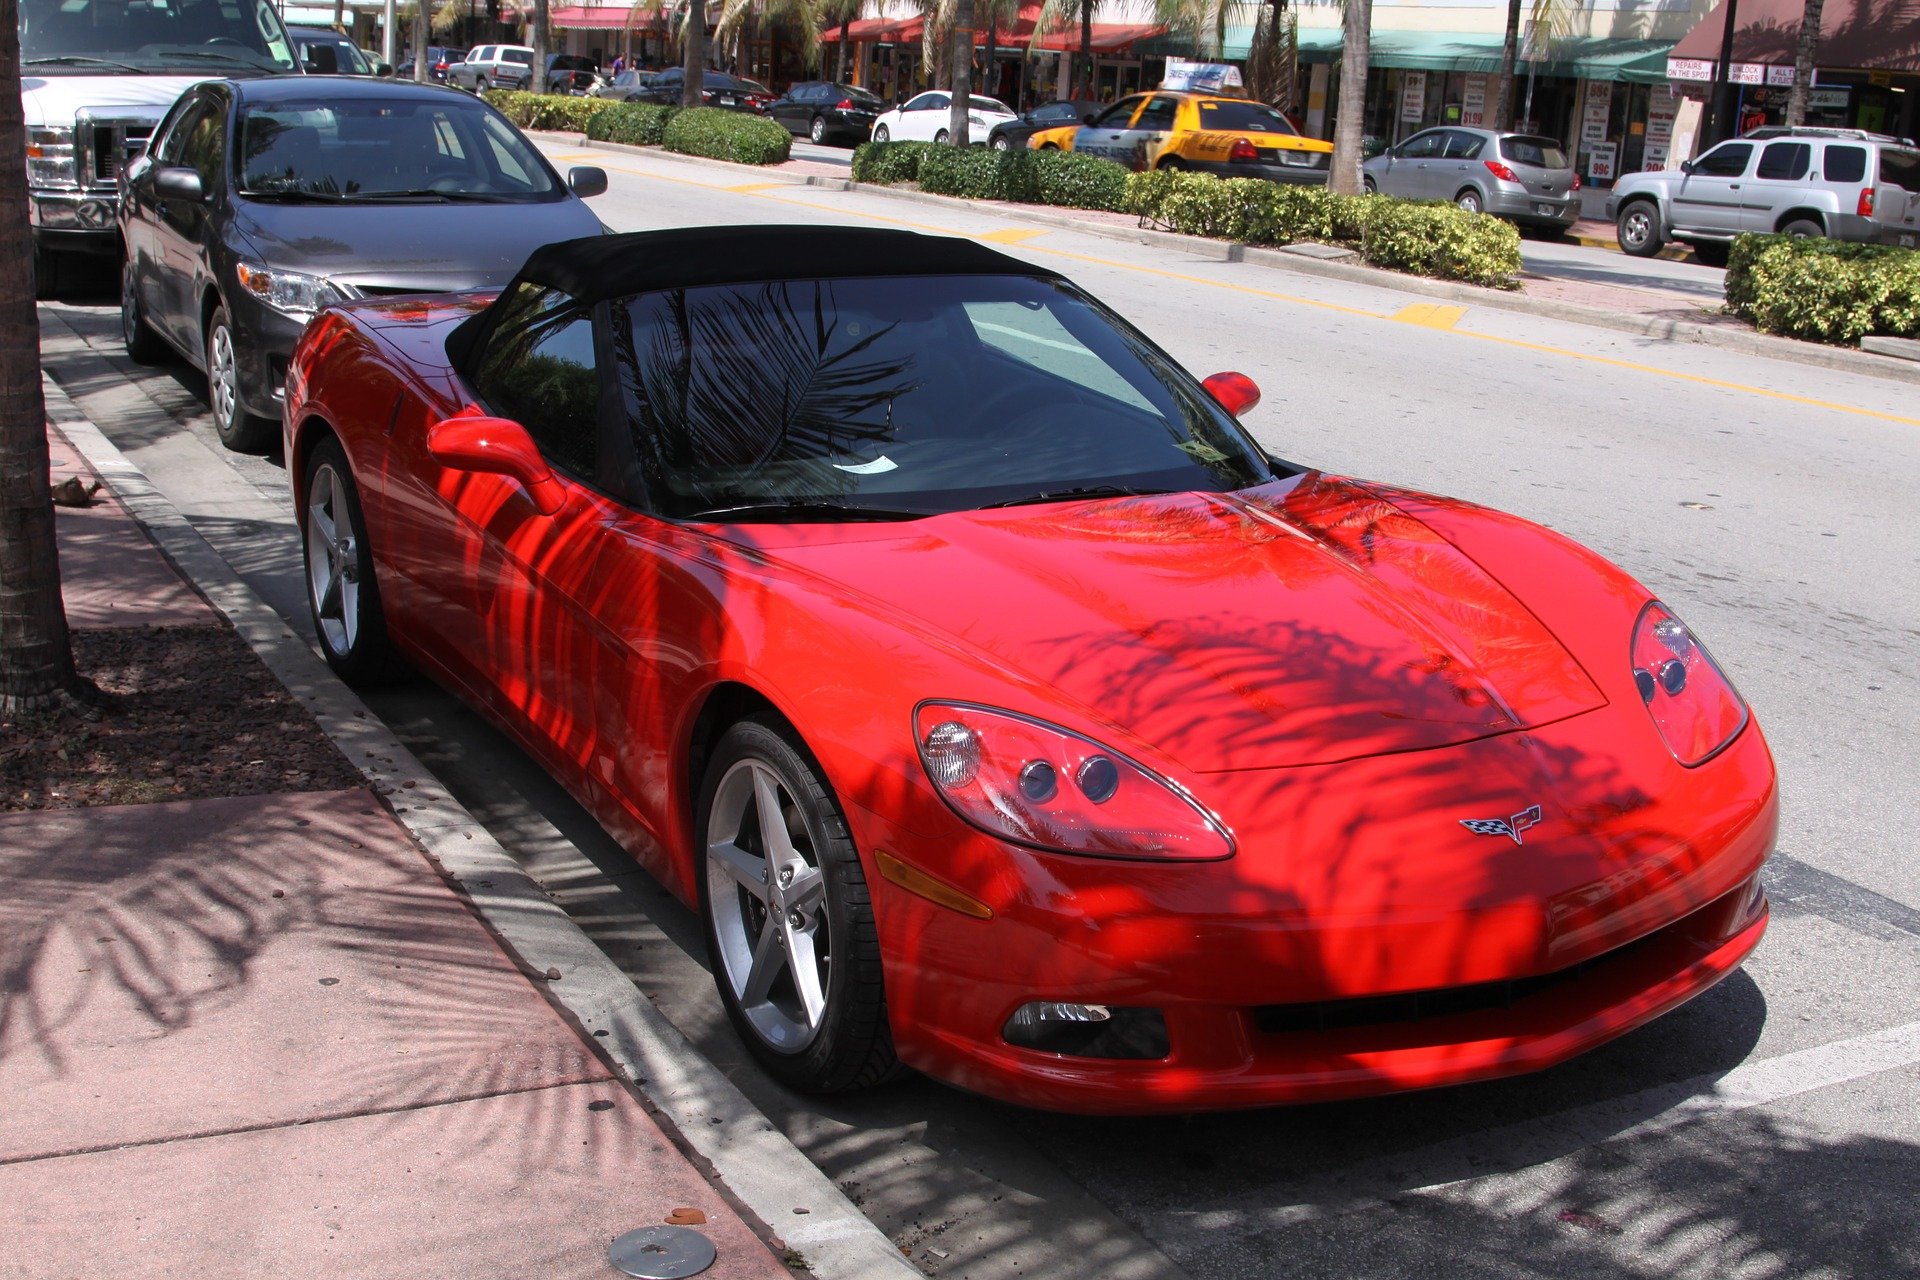 Red Corvette in Providence